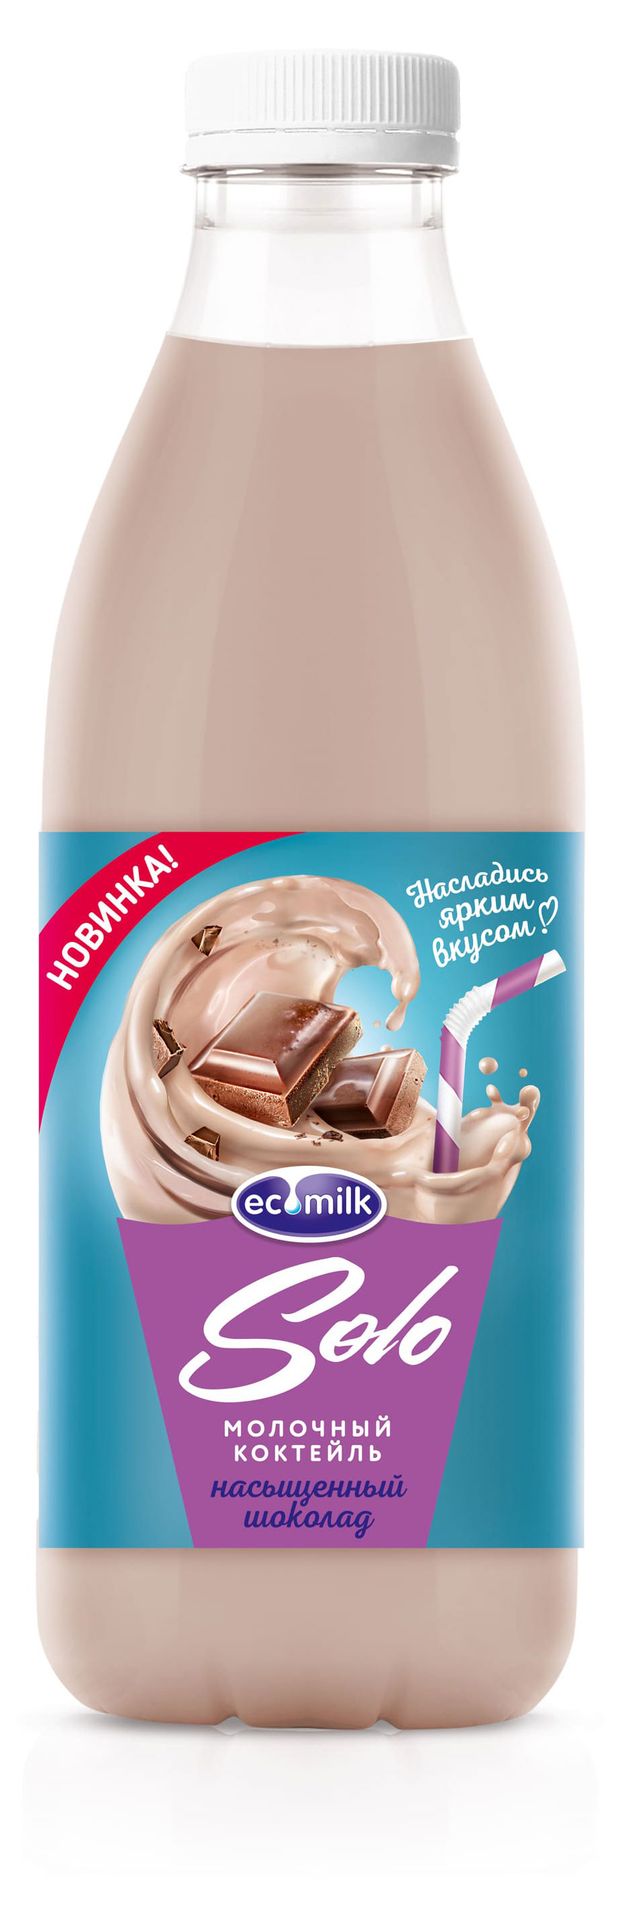 фото Молочный коктейль ecomilk.solo насыщенный шоколад 2% 930 мл